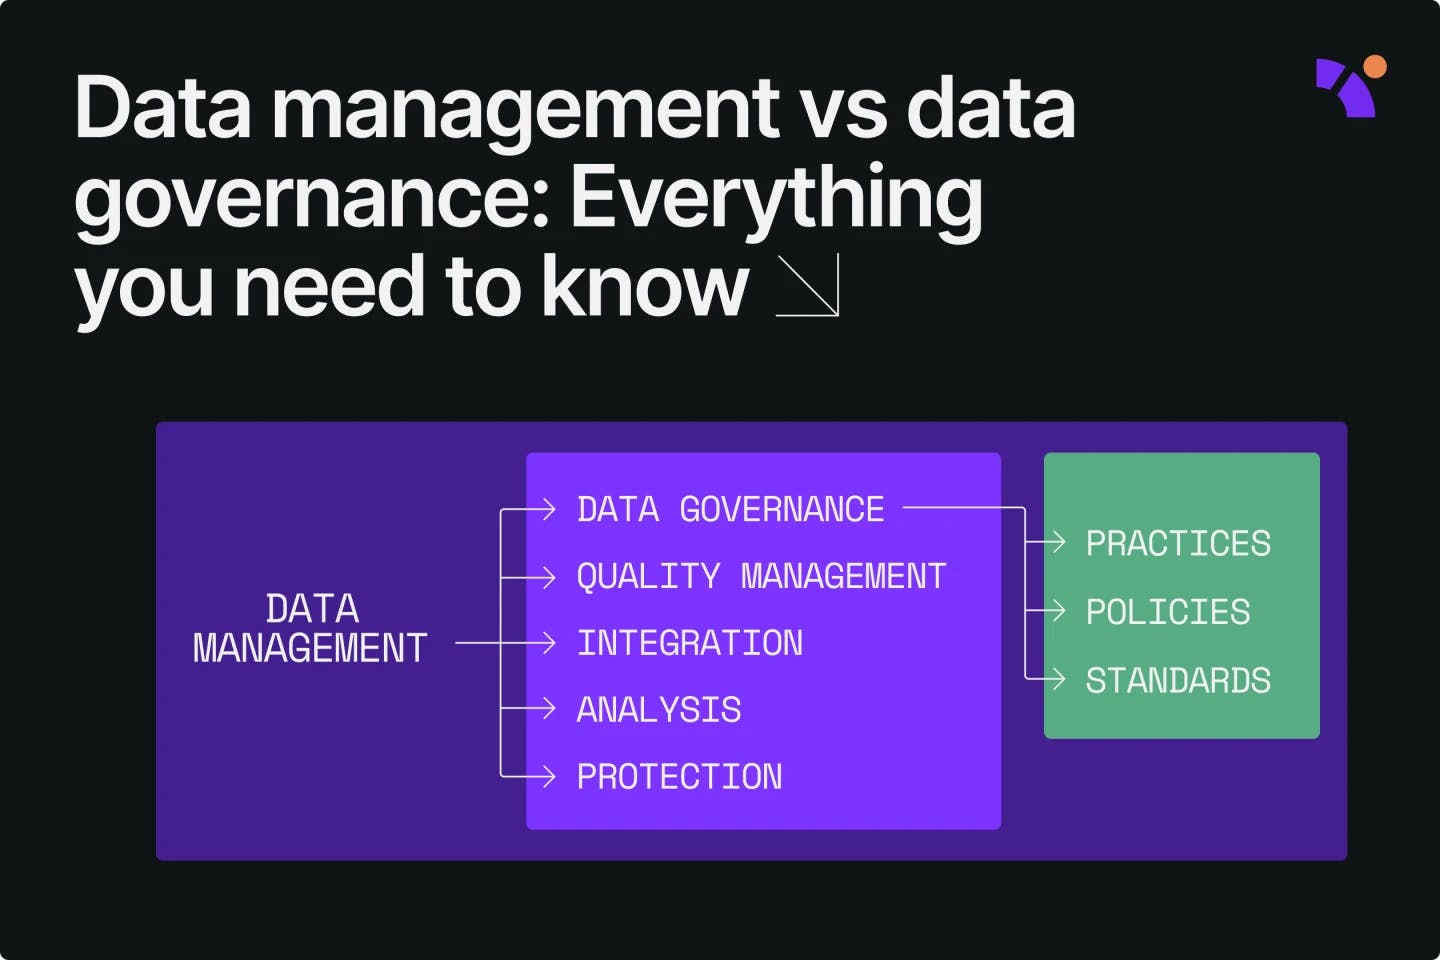 Data management activities